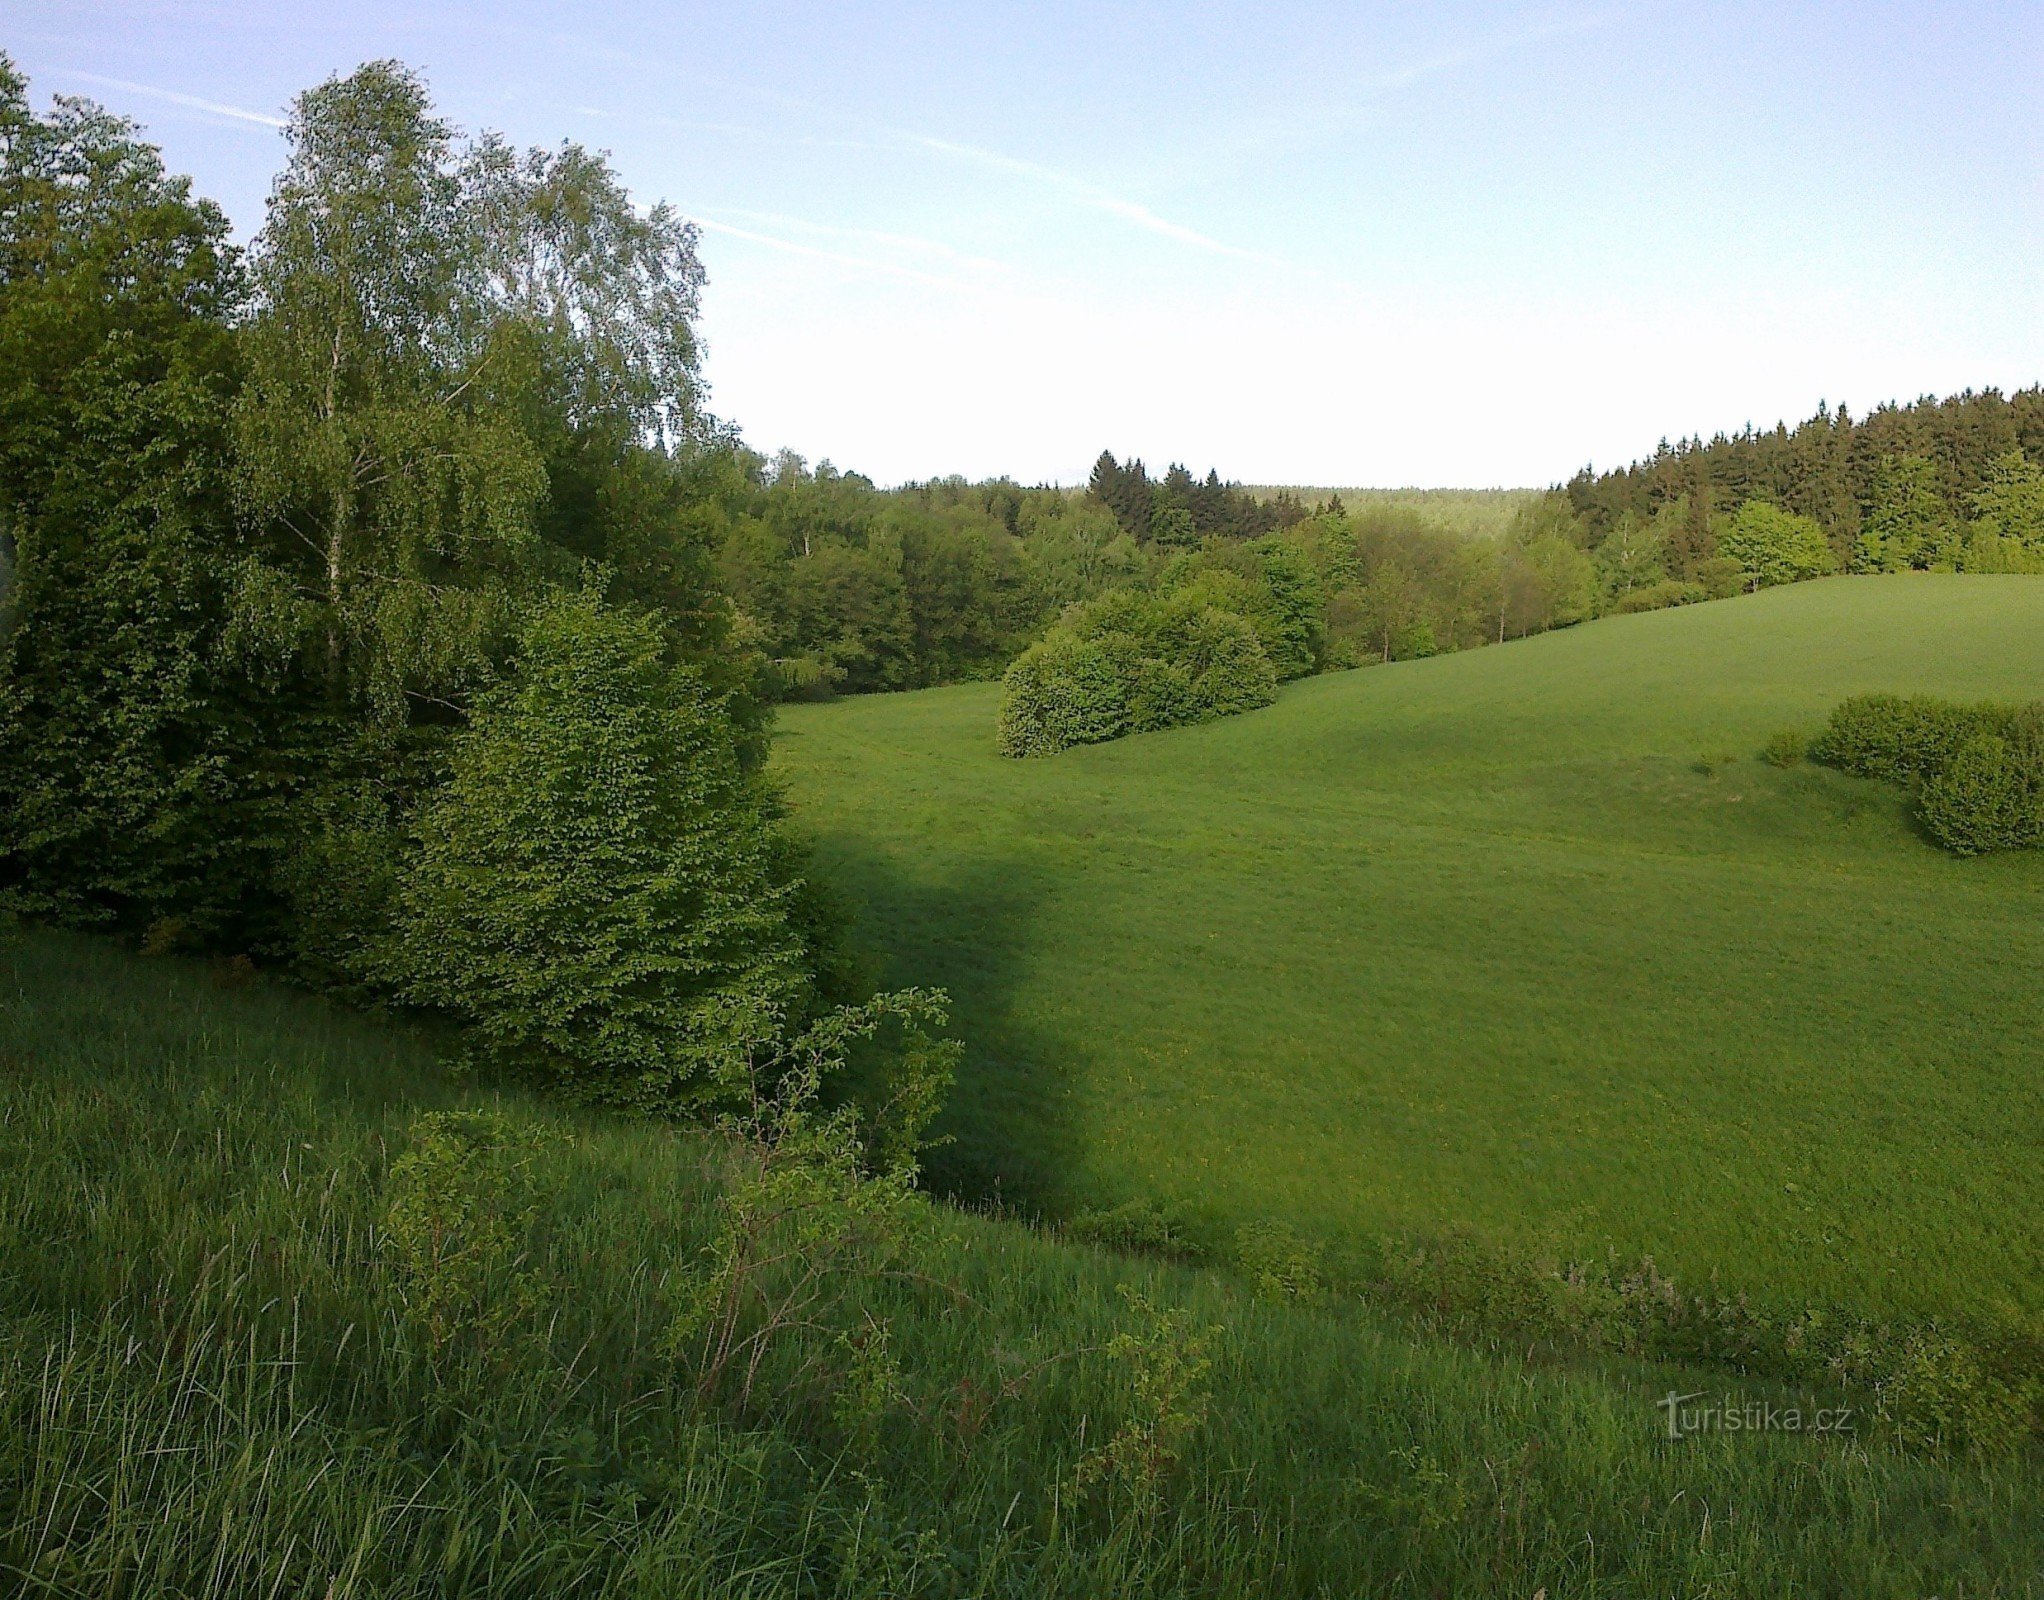 Green world near Hradisk I.